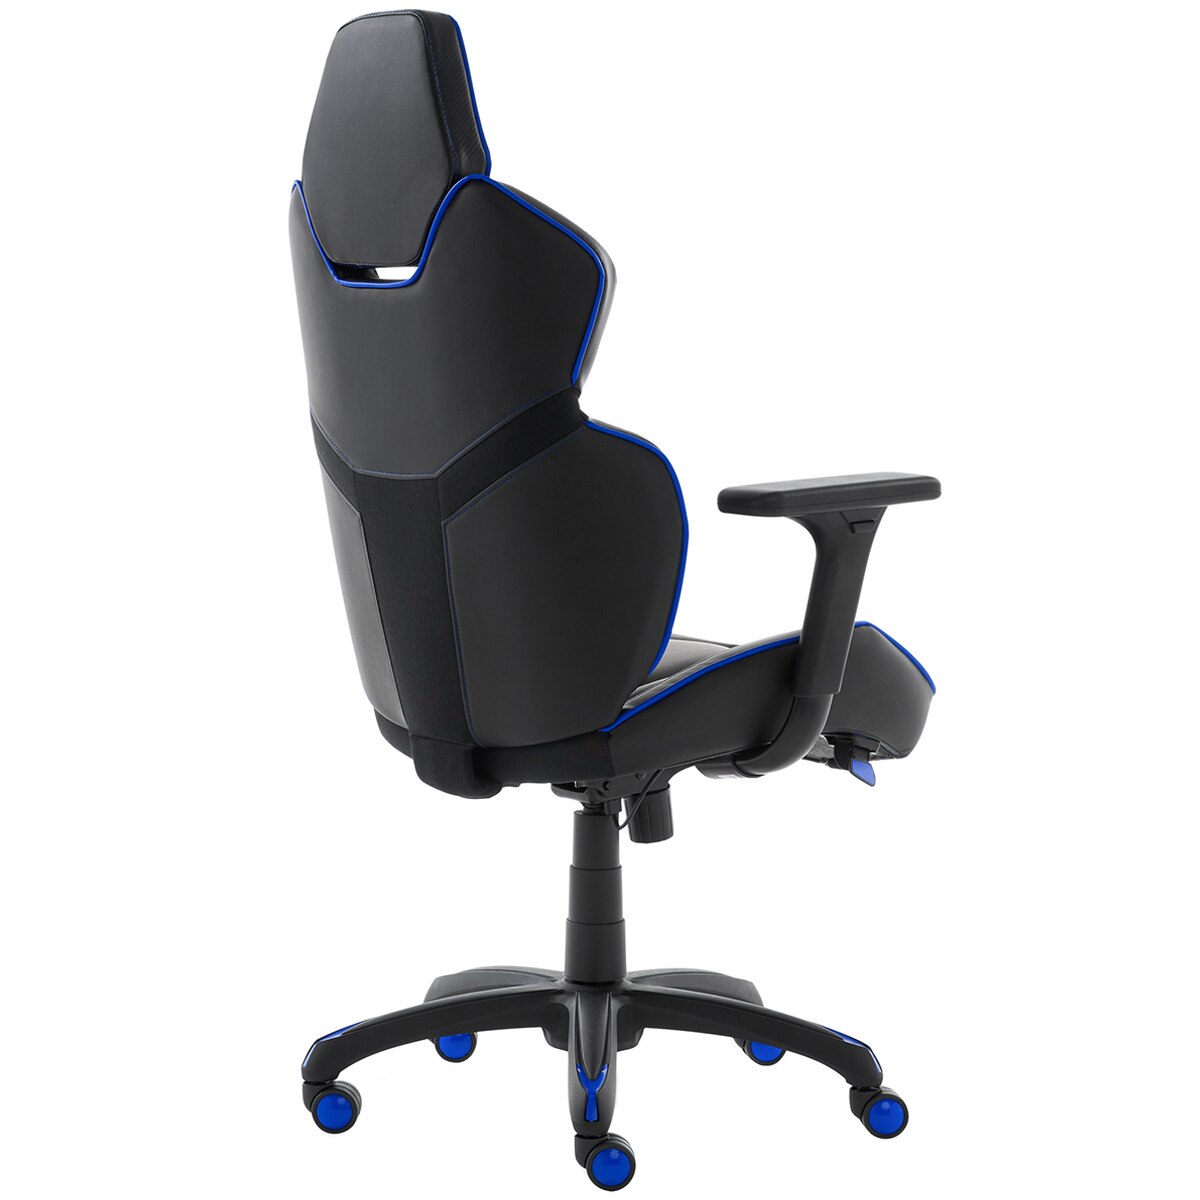 Damage Per Second 3d Insight Gaming Chair Costco Australia